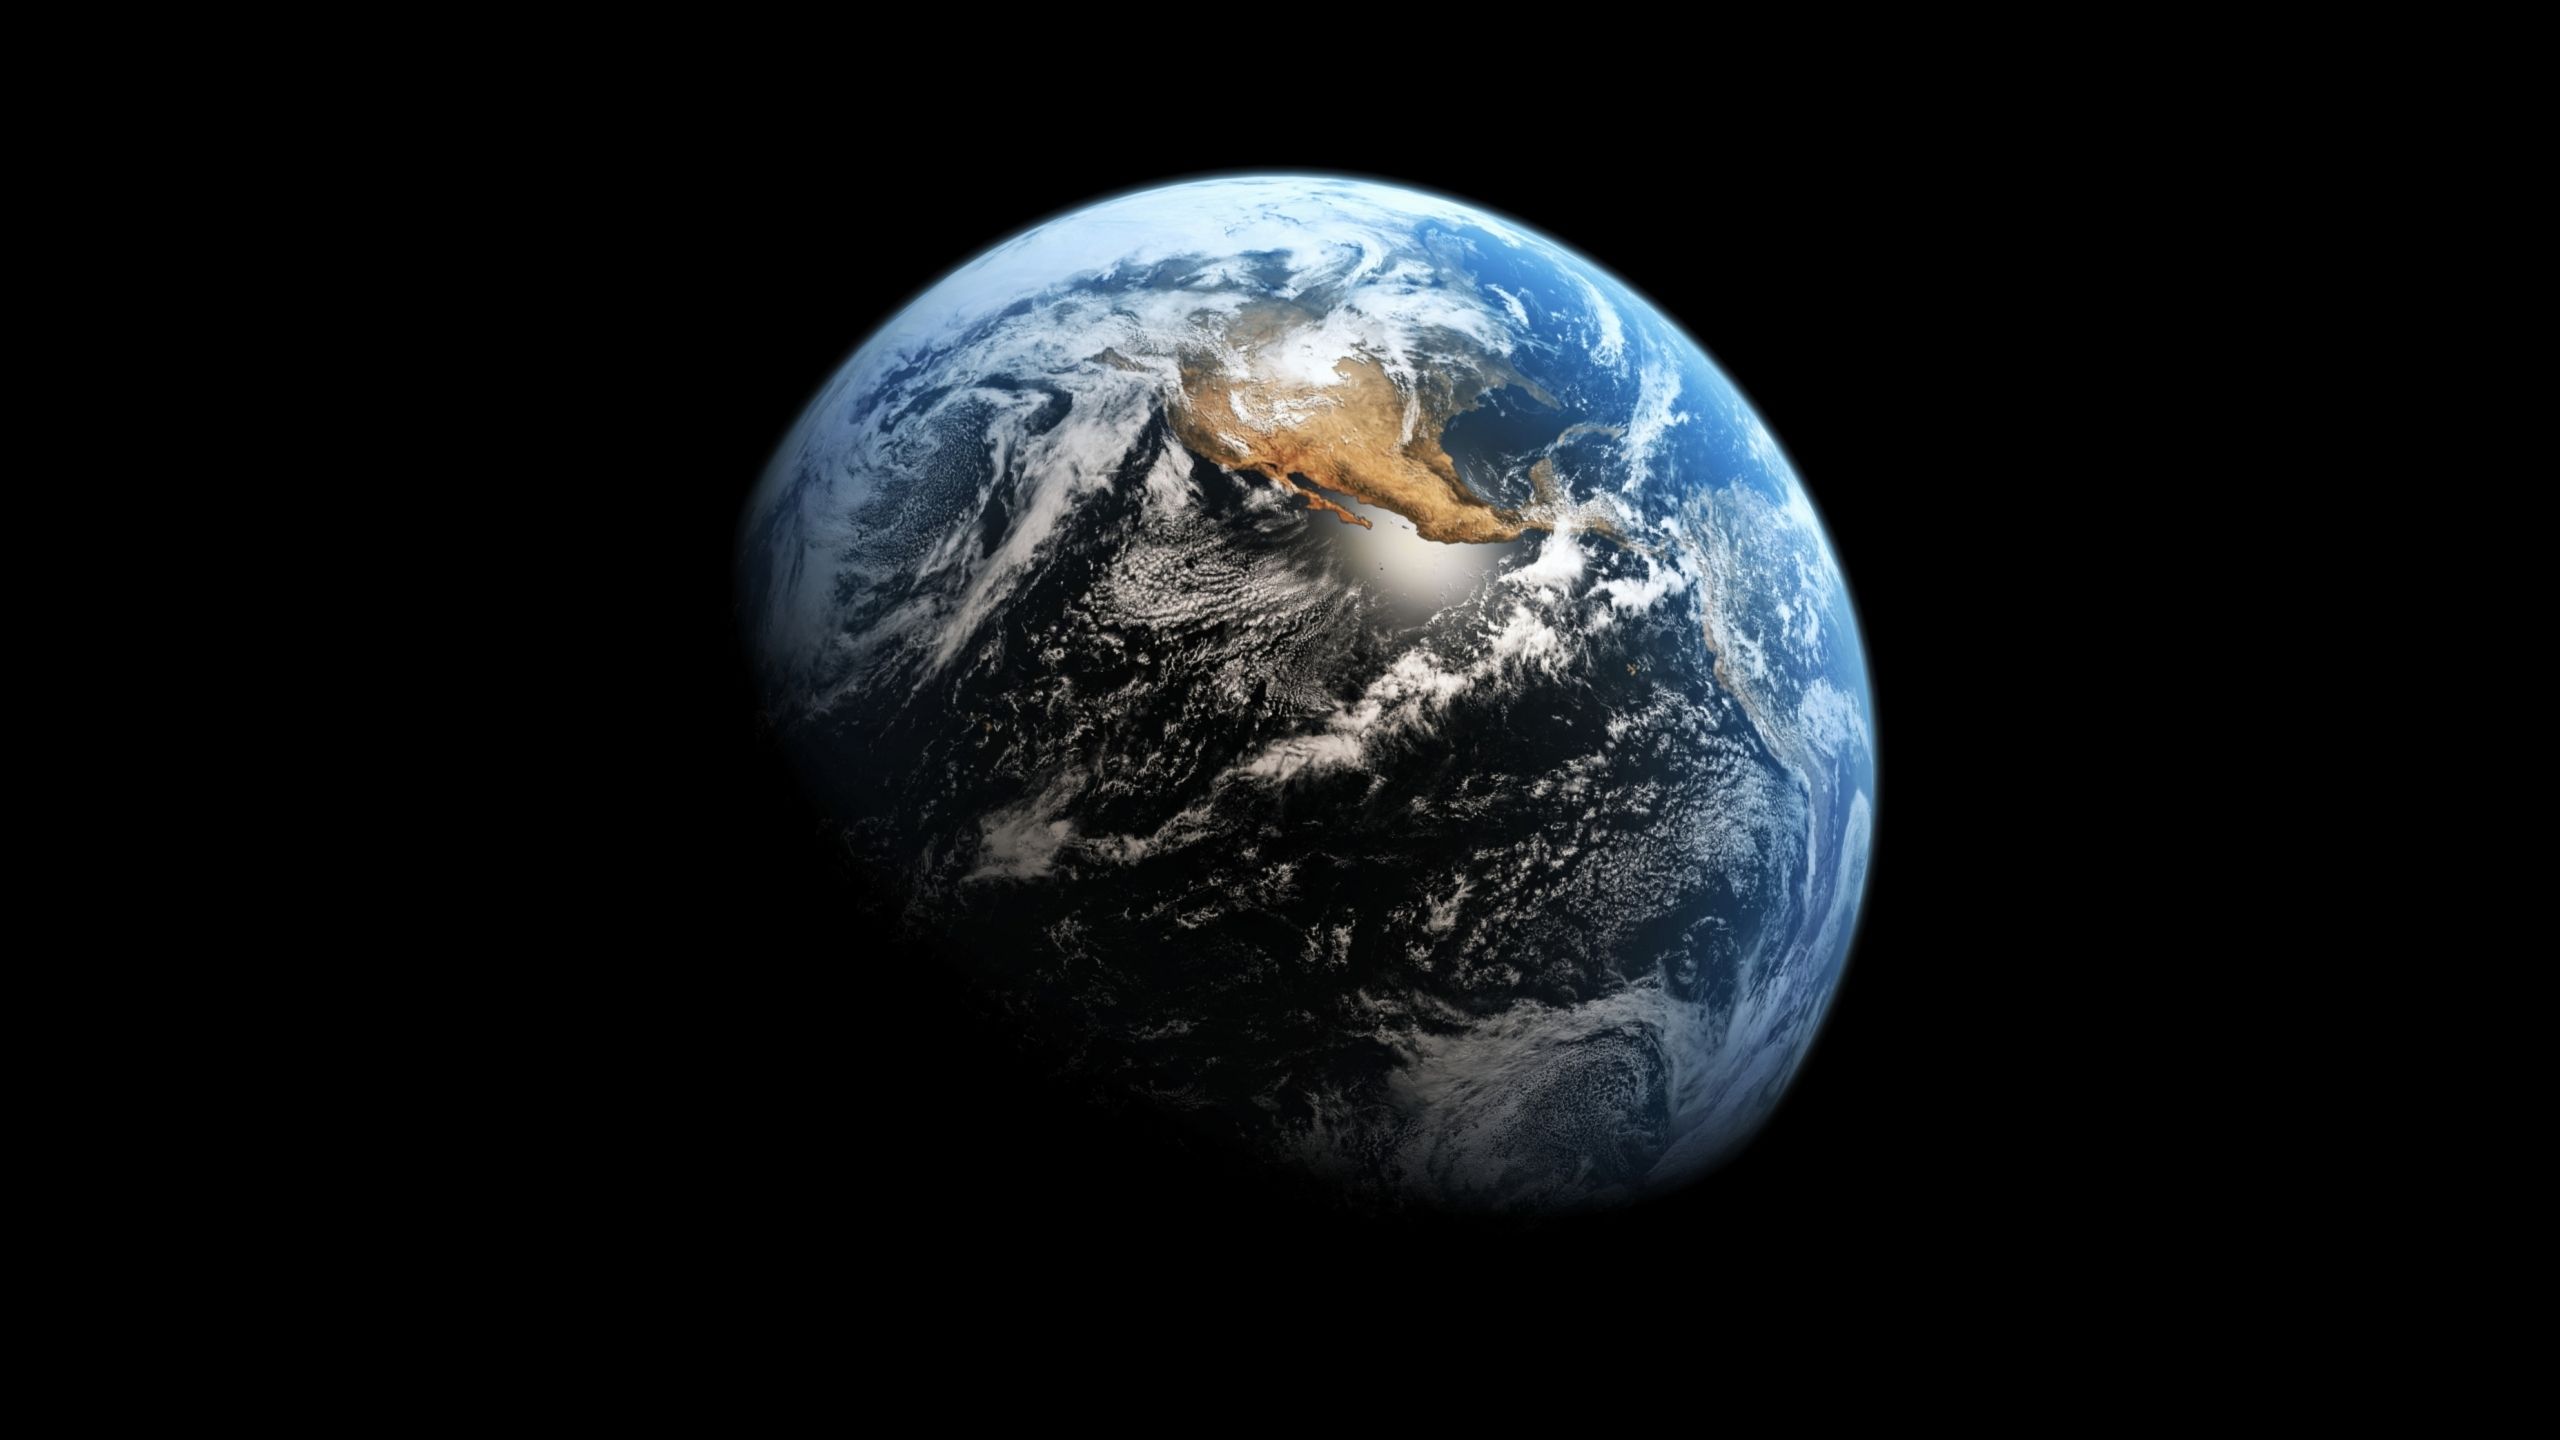 Earth 8 Mac Wallpaper Download | Free Mac Wallpapers Download